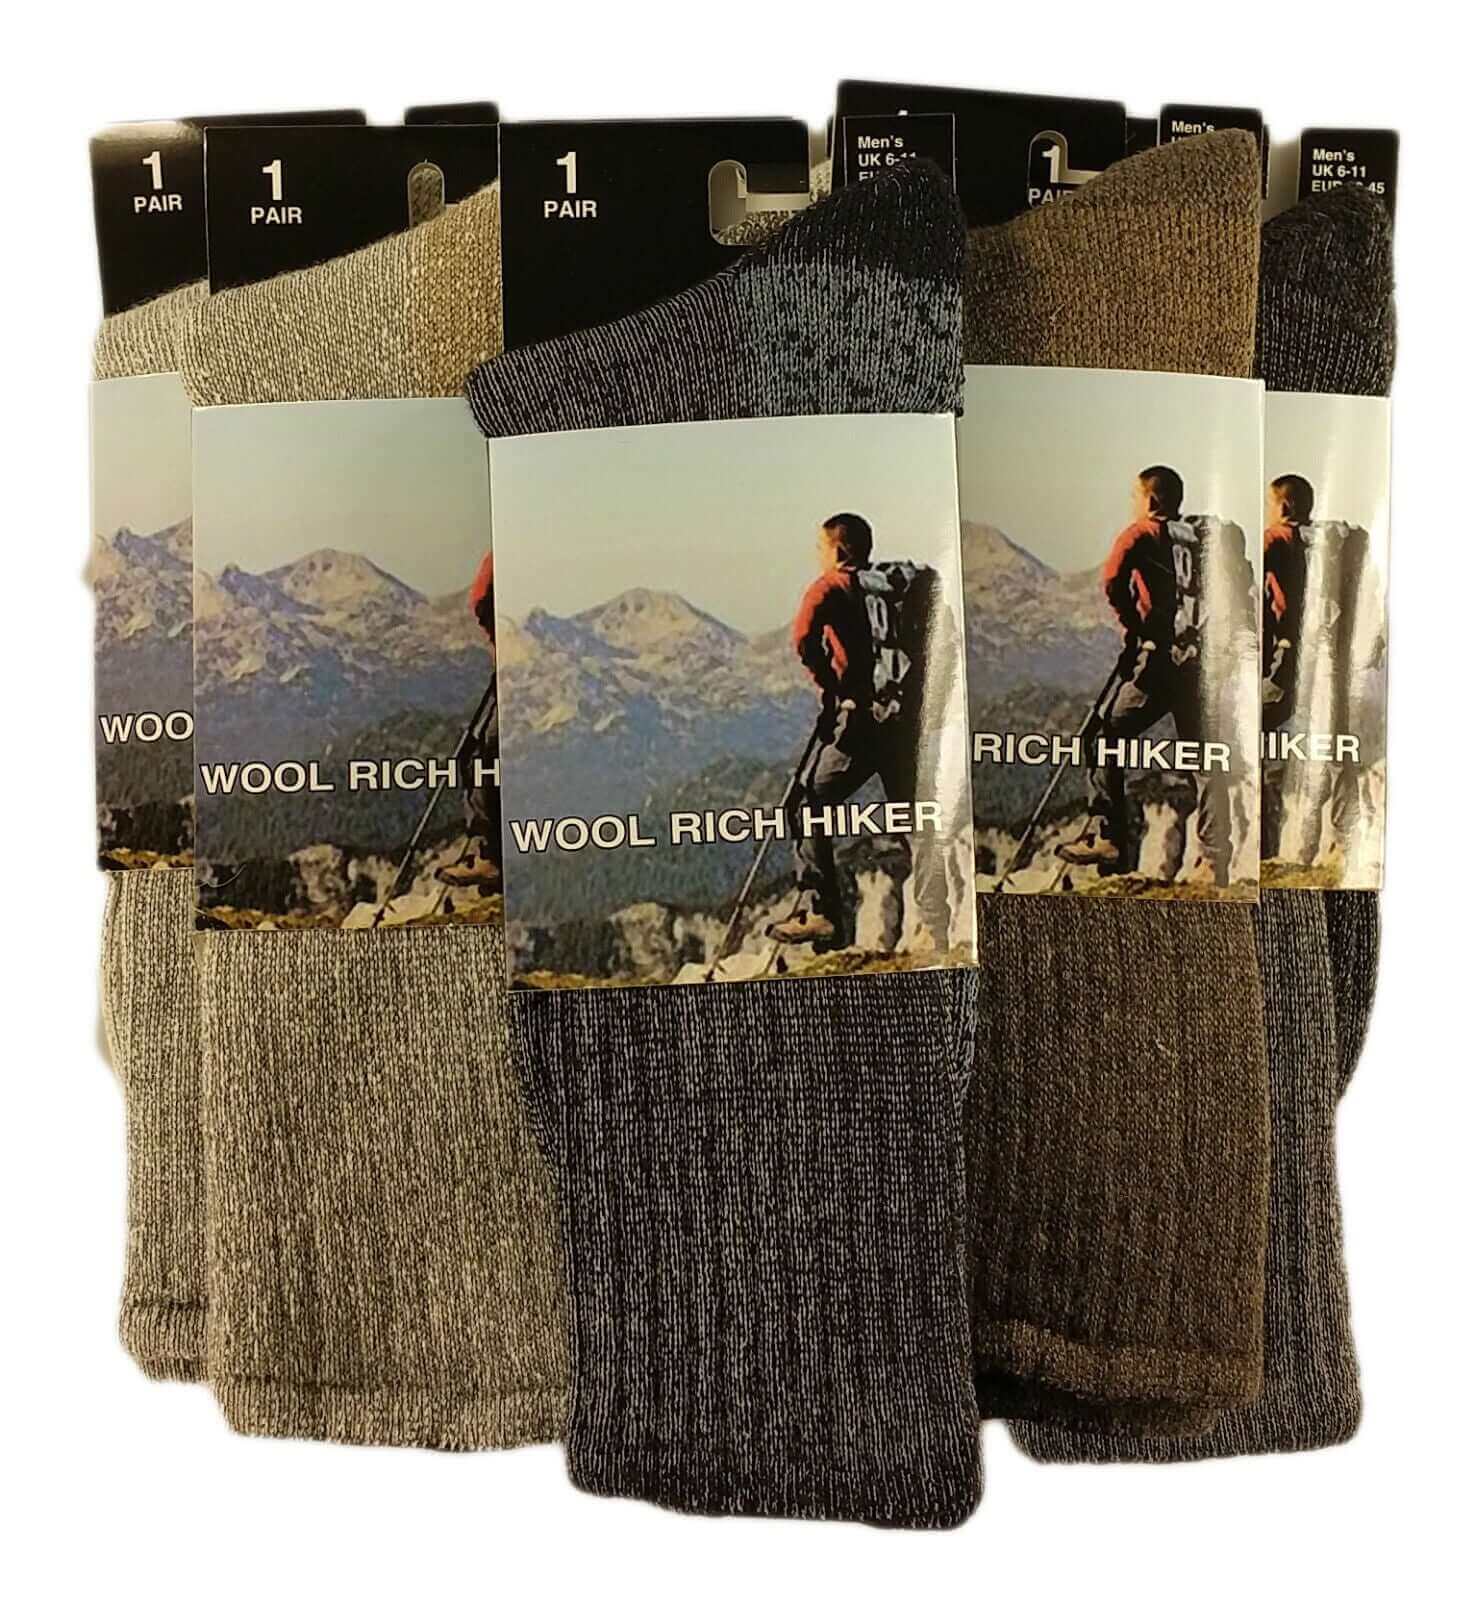 3 Pairs Of Men's Wool Hiking Trekking Socks, Thick Chunky Walking Boot Socks. Buy now for £9.00. A Socks by Sock Stack. 6-11, acrylic, assorted, boot socks, boys socks, breathable, brown, chunky, clothing, comfortable, cream, grey, hiking, long socks, men